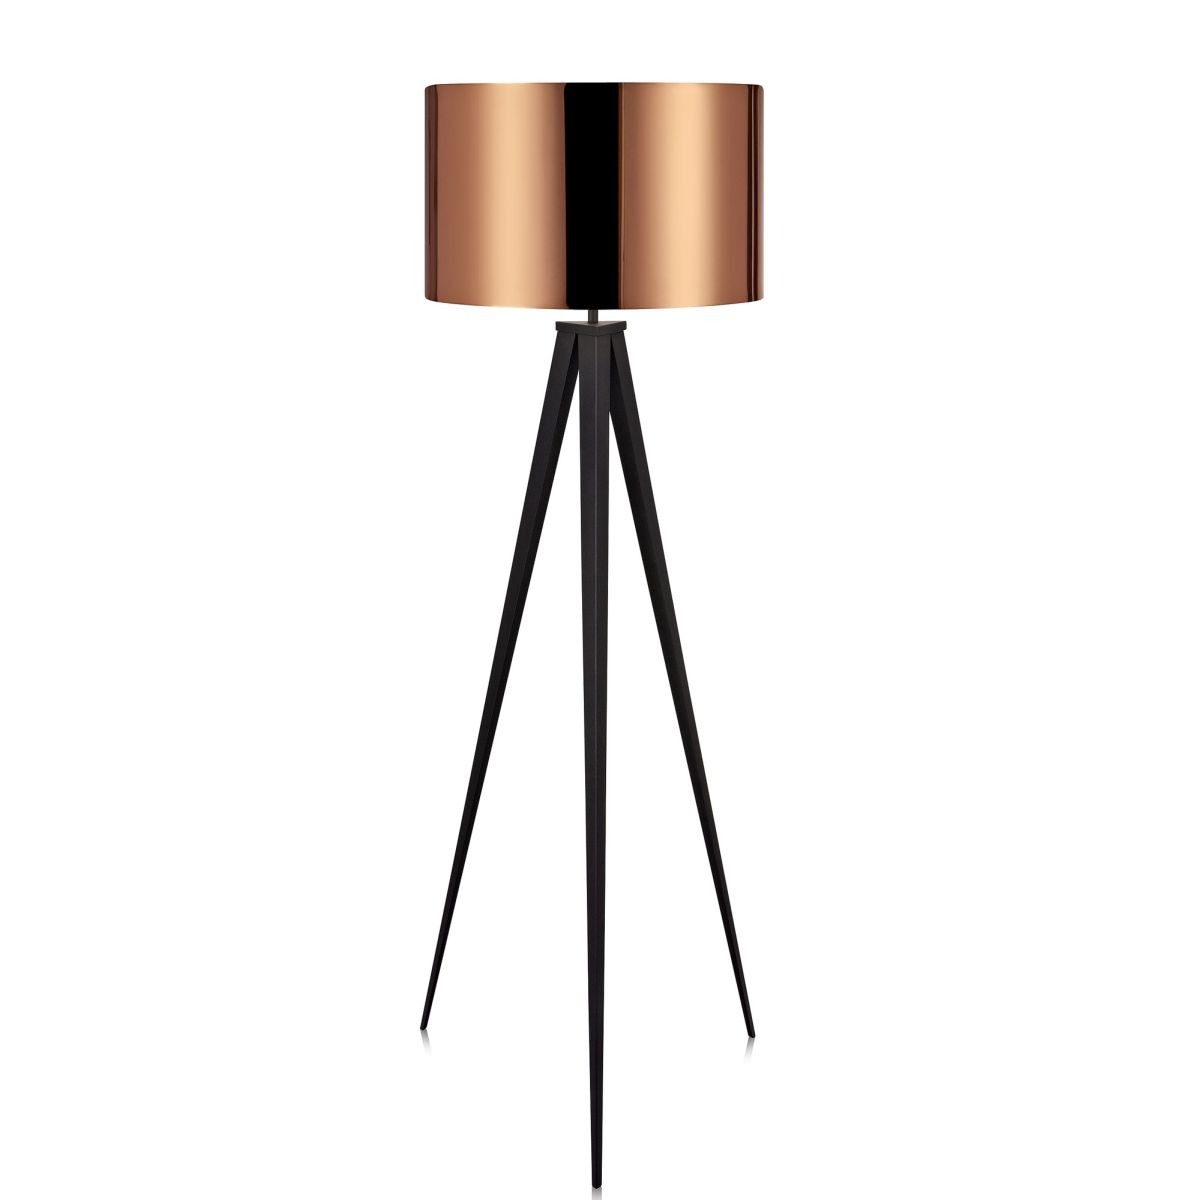 Romanza Tripod Floor Lamp Copper throughout sizing 1200 X 1200